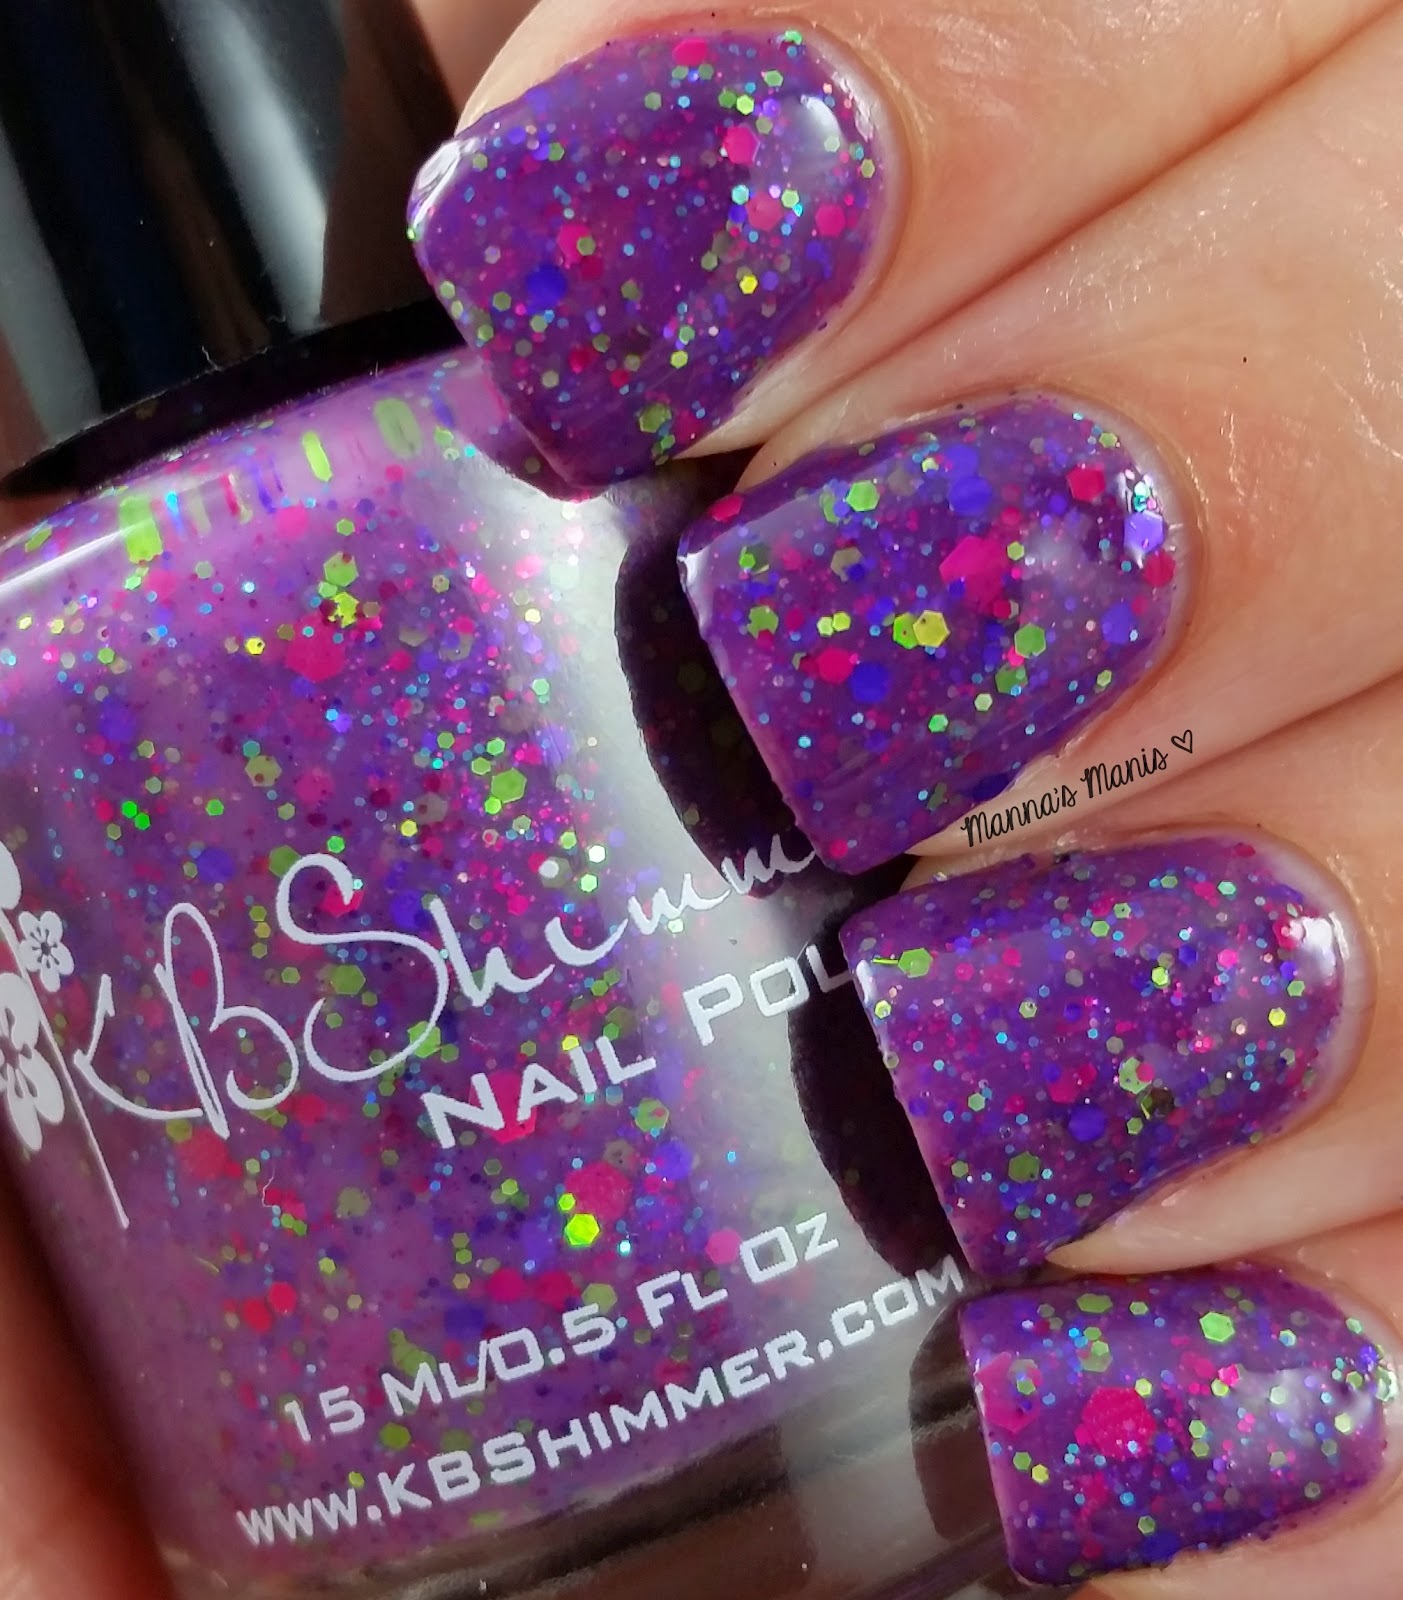 kbshimmer sugar plum faerie, a purple crelly nail polish